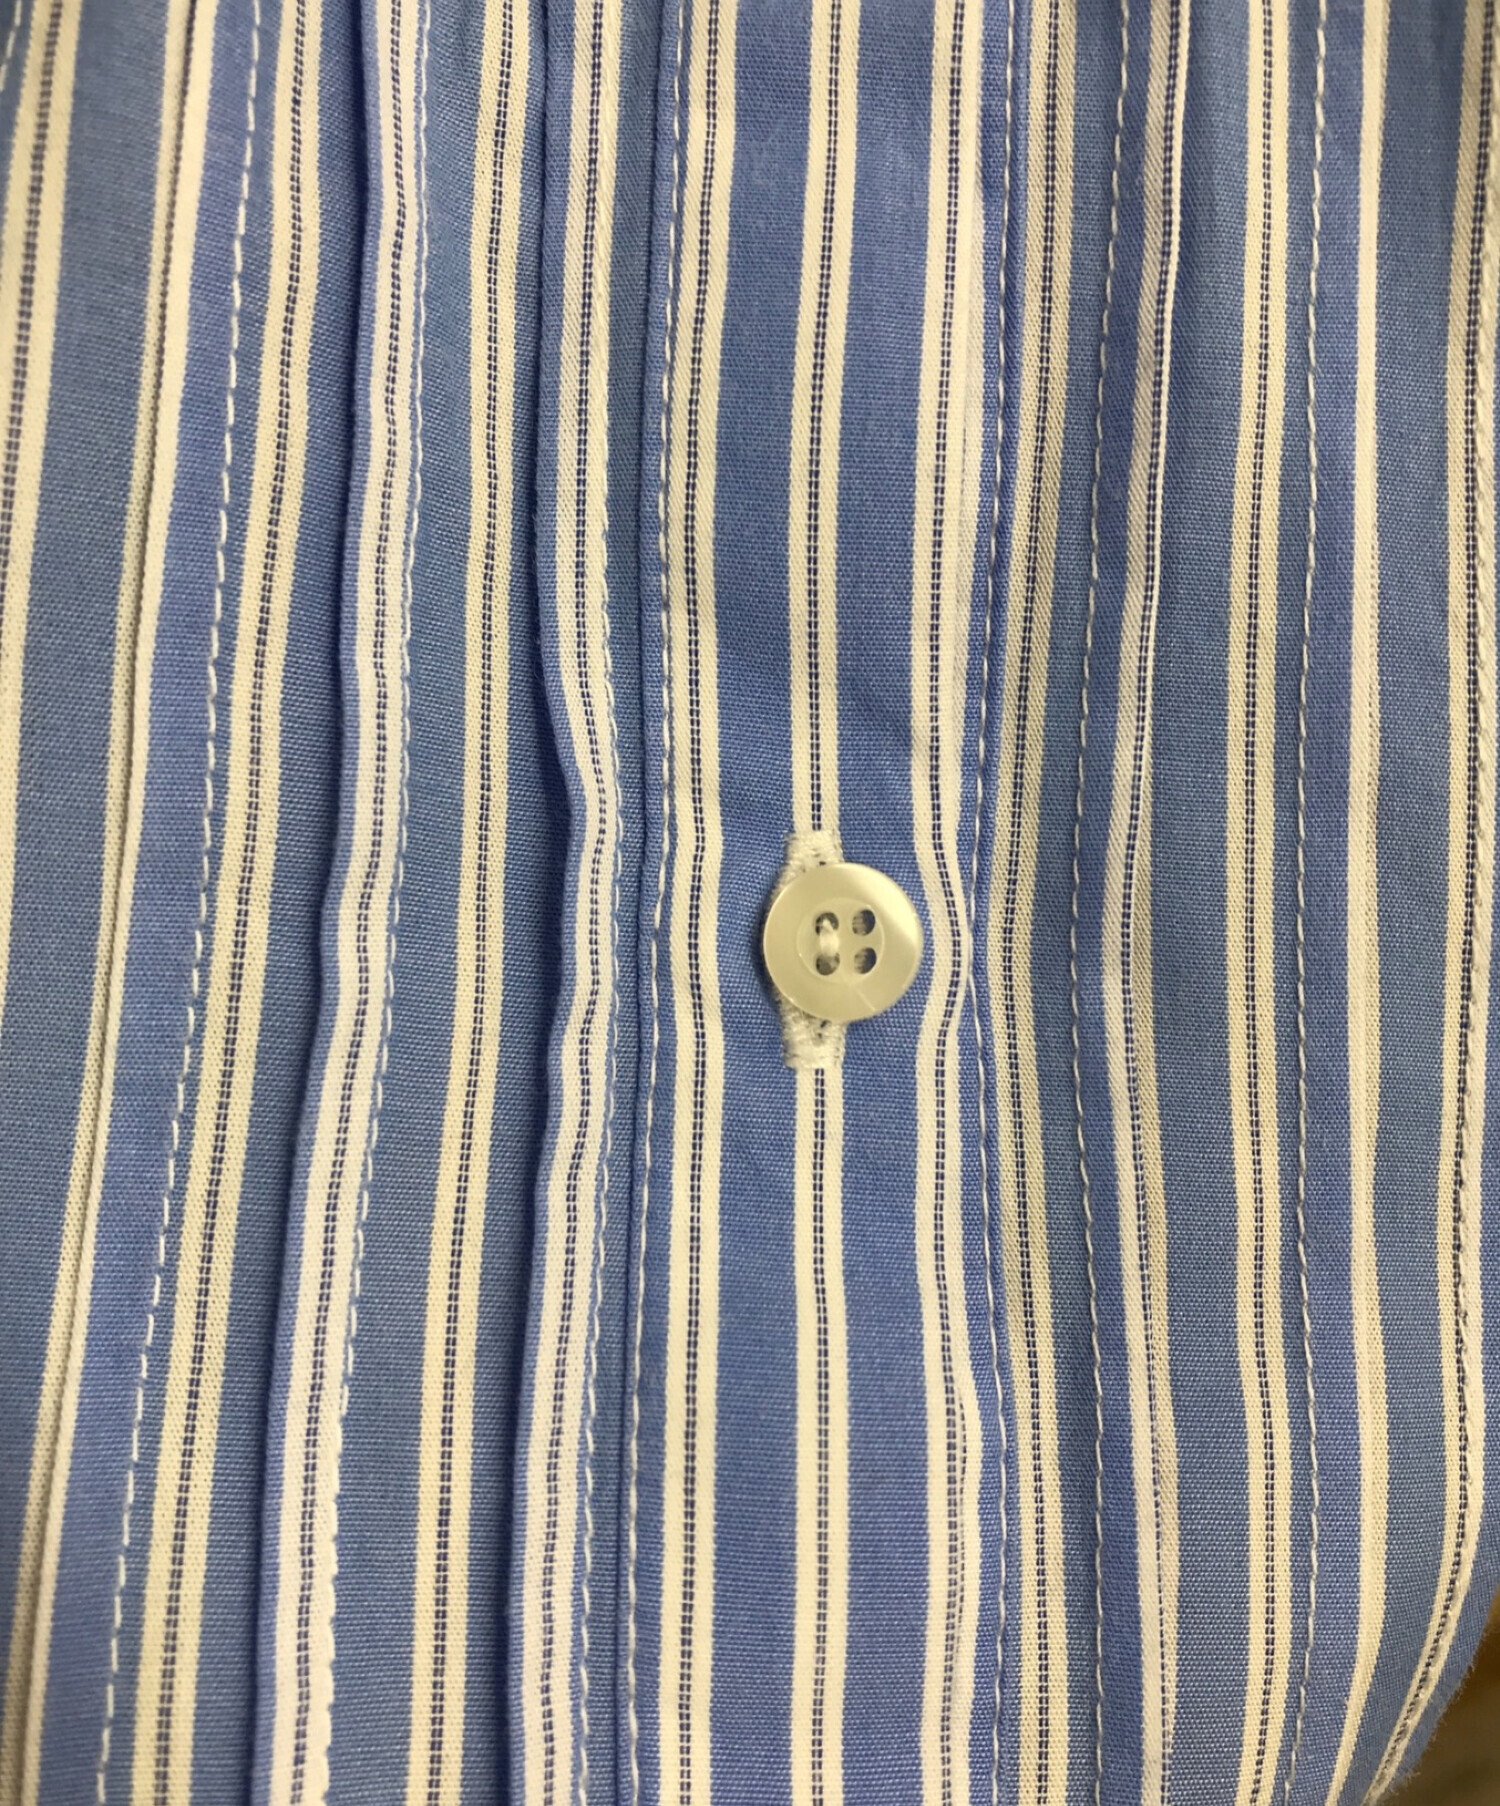 CADUNE (カデュネ) 袖刺繍ストライプブラウス ブルー サイズ:36